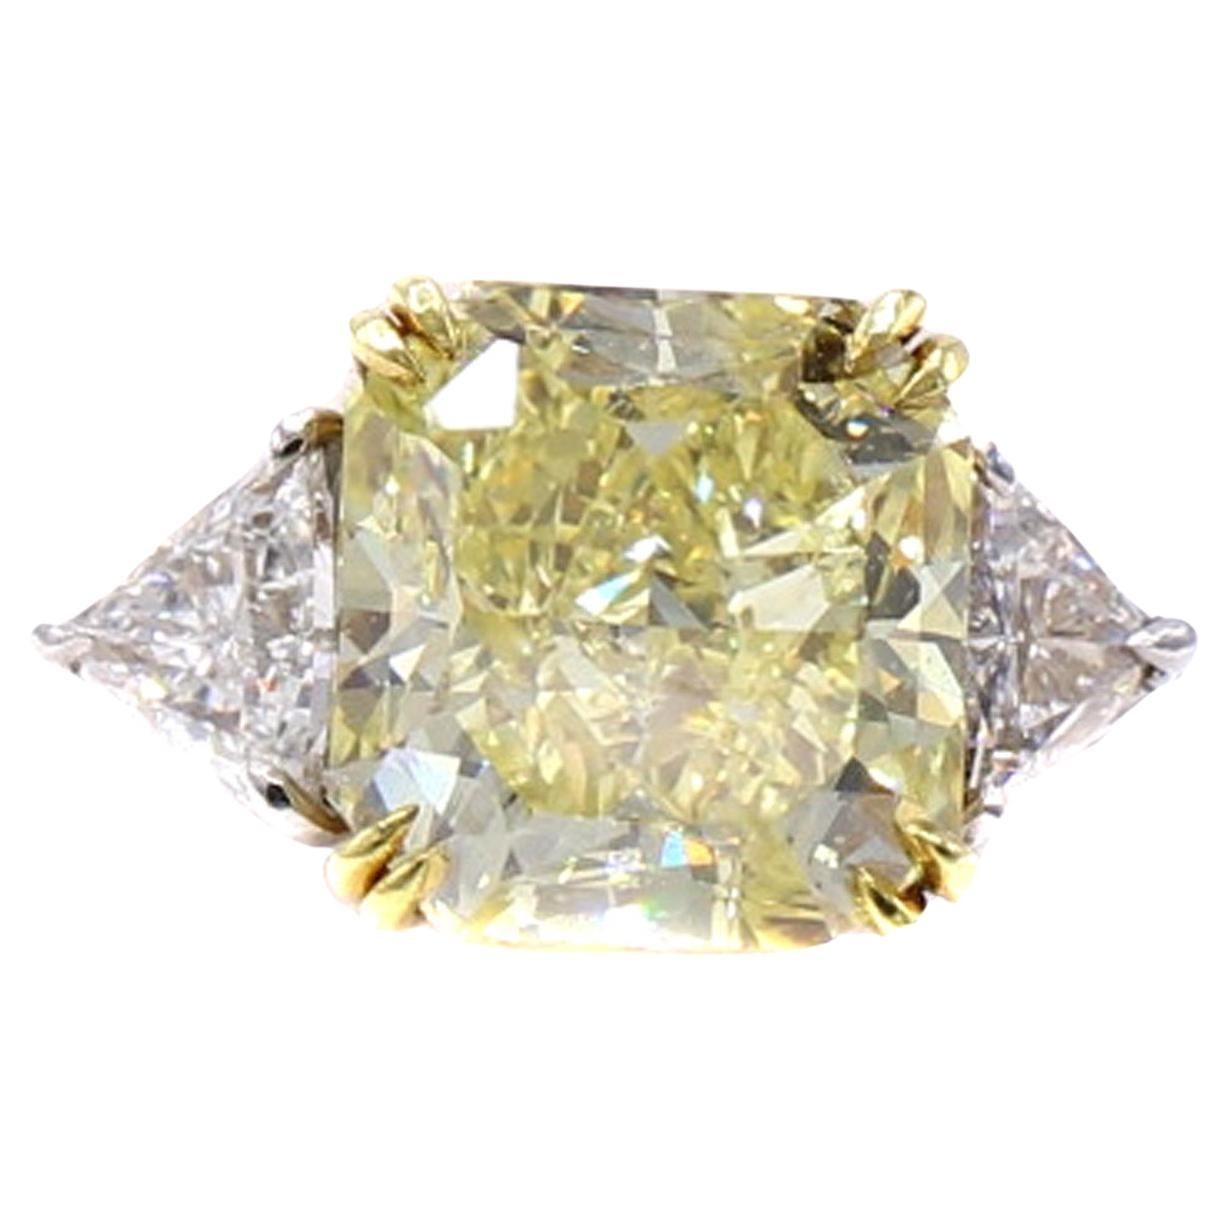 5.03 Carat Fancy Intense Yellow Radiant Cut Diamond Ring